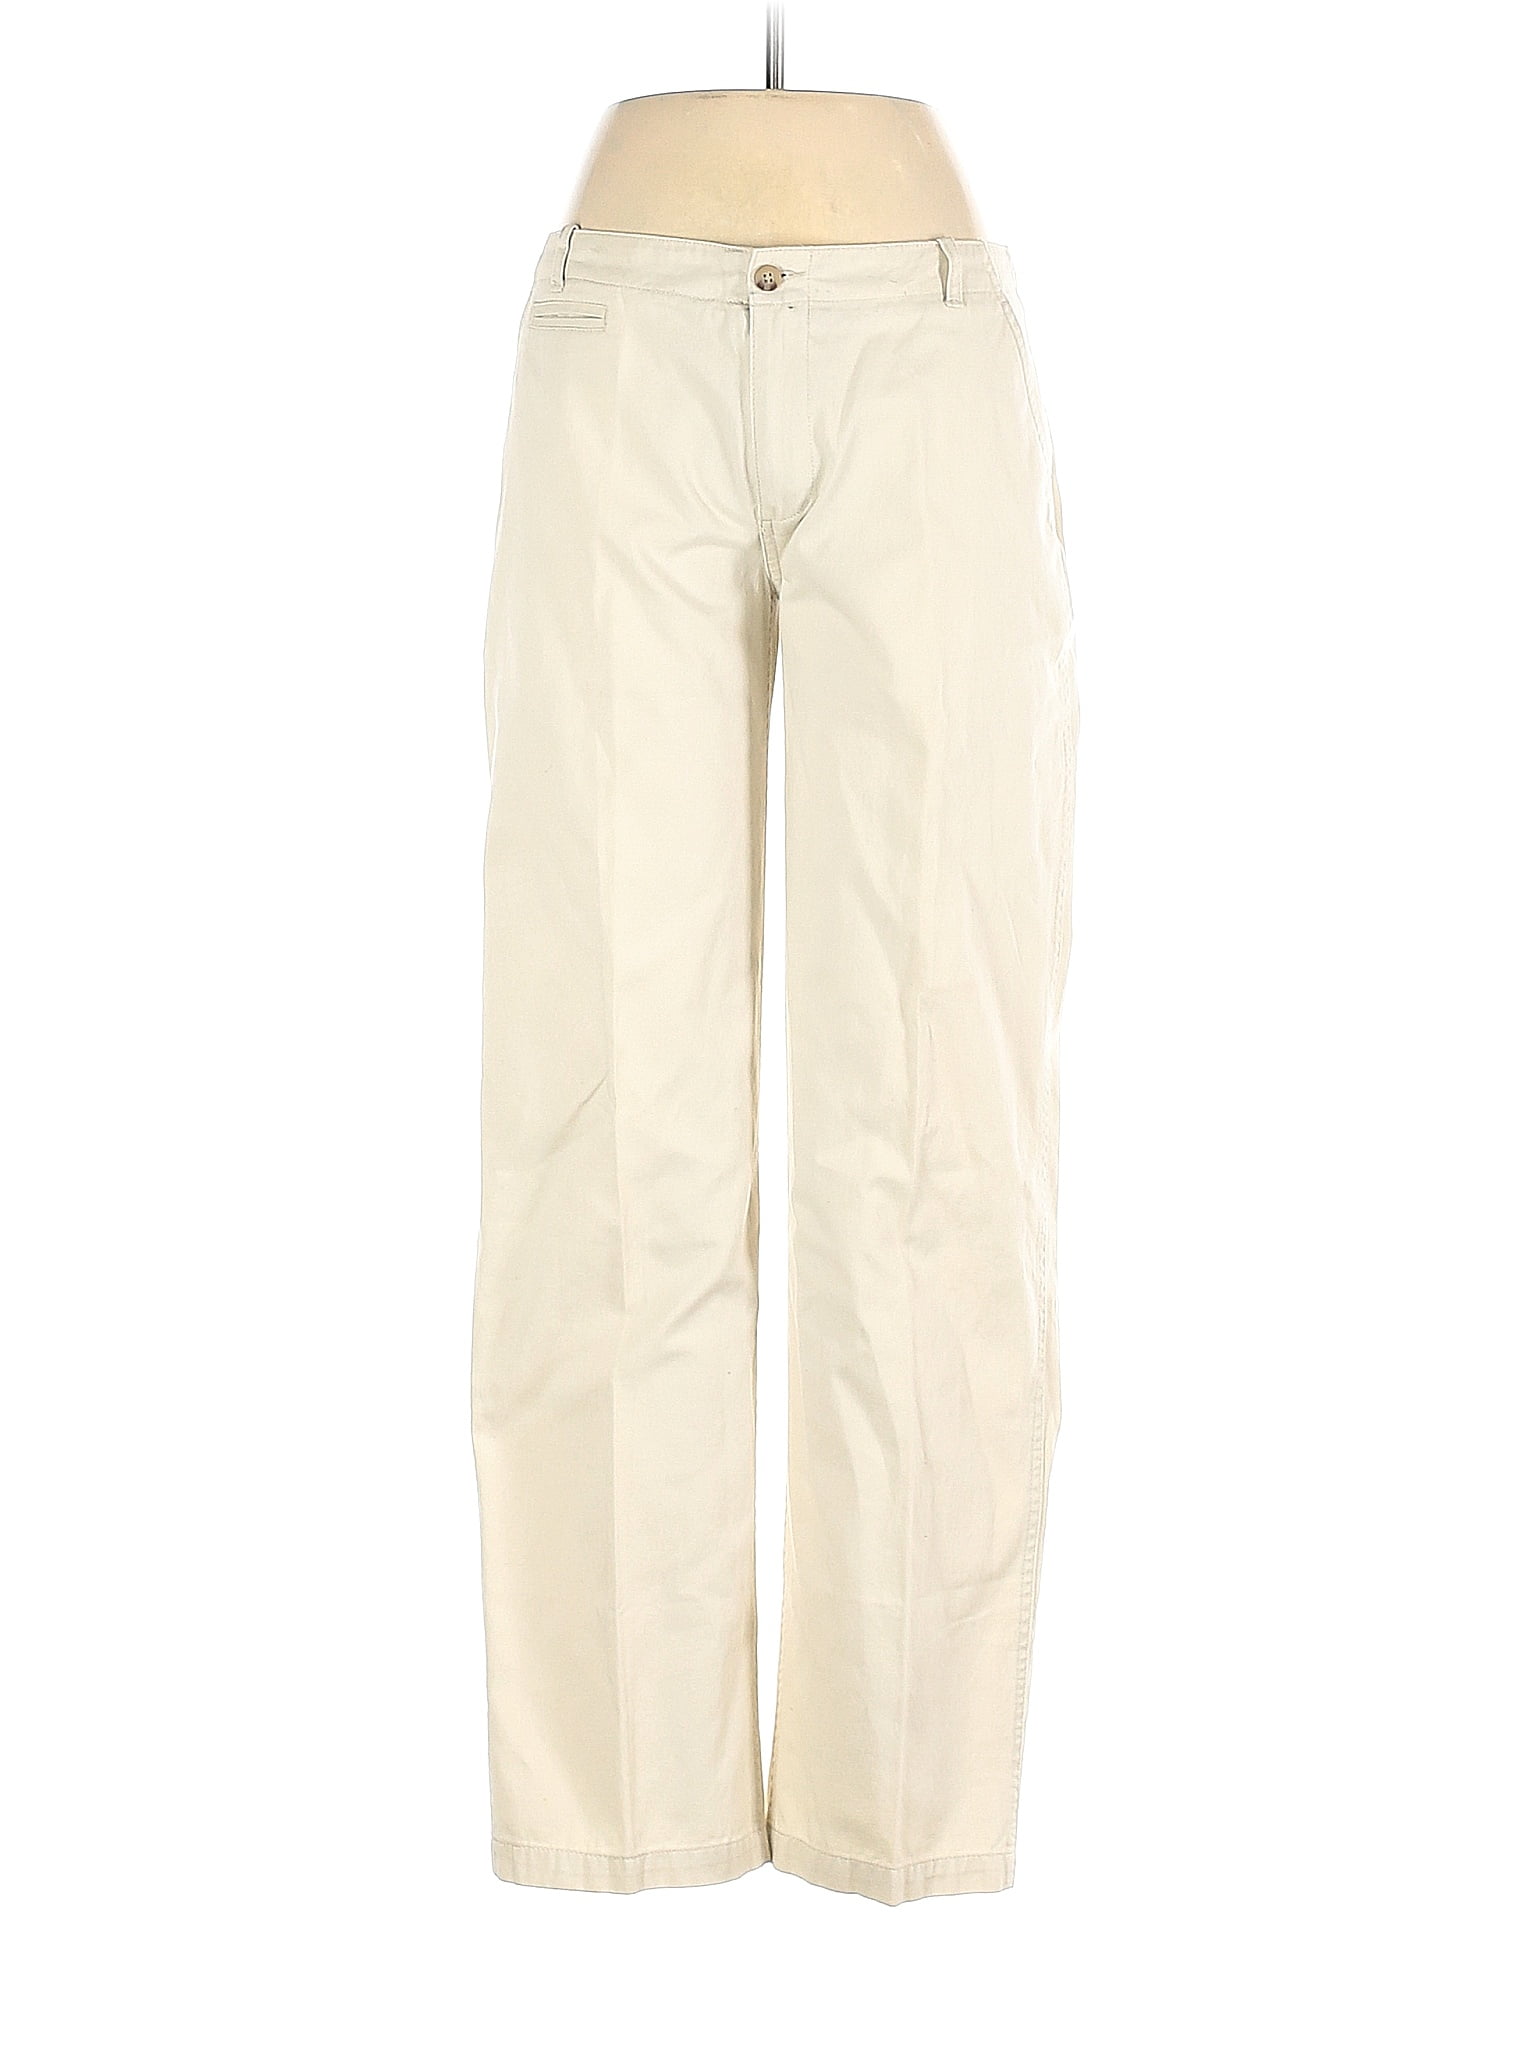 Chaps 100% Cotton Solid Ivory Khakis Size 18 (Plus) - 56% off | ThredUp